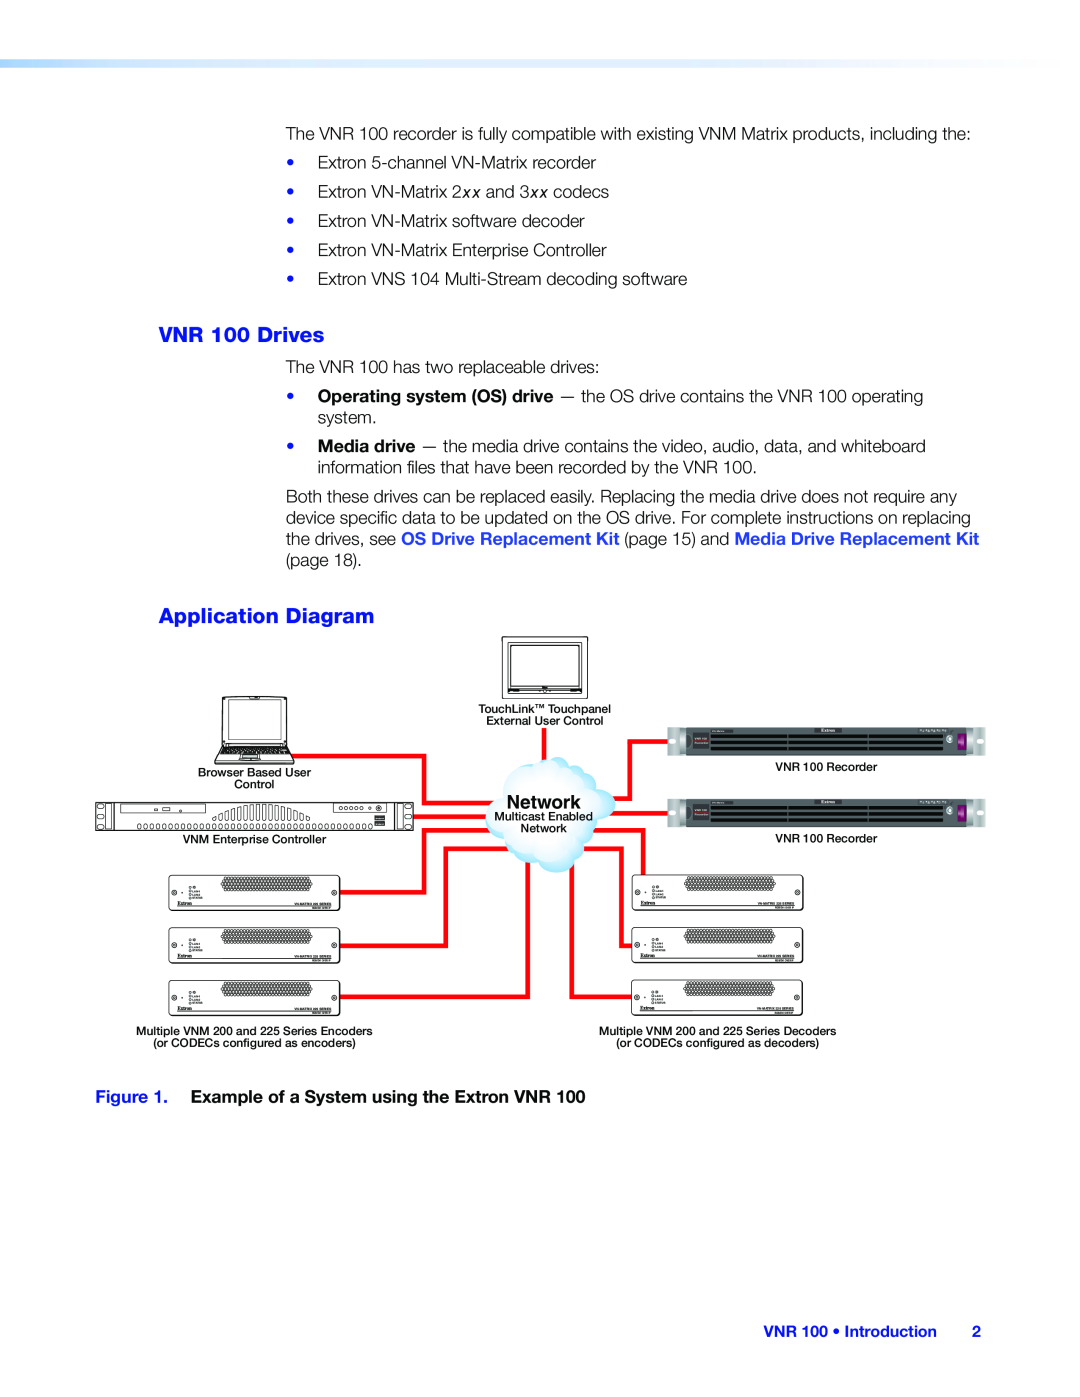 Extron electronic manual VNR 100 Drives, Application Diagram, Network 